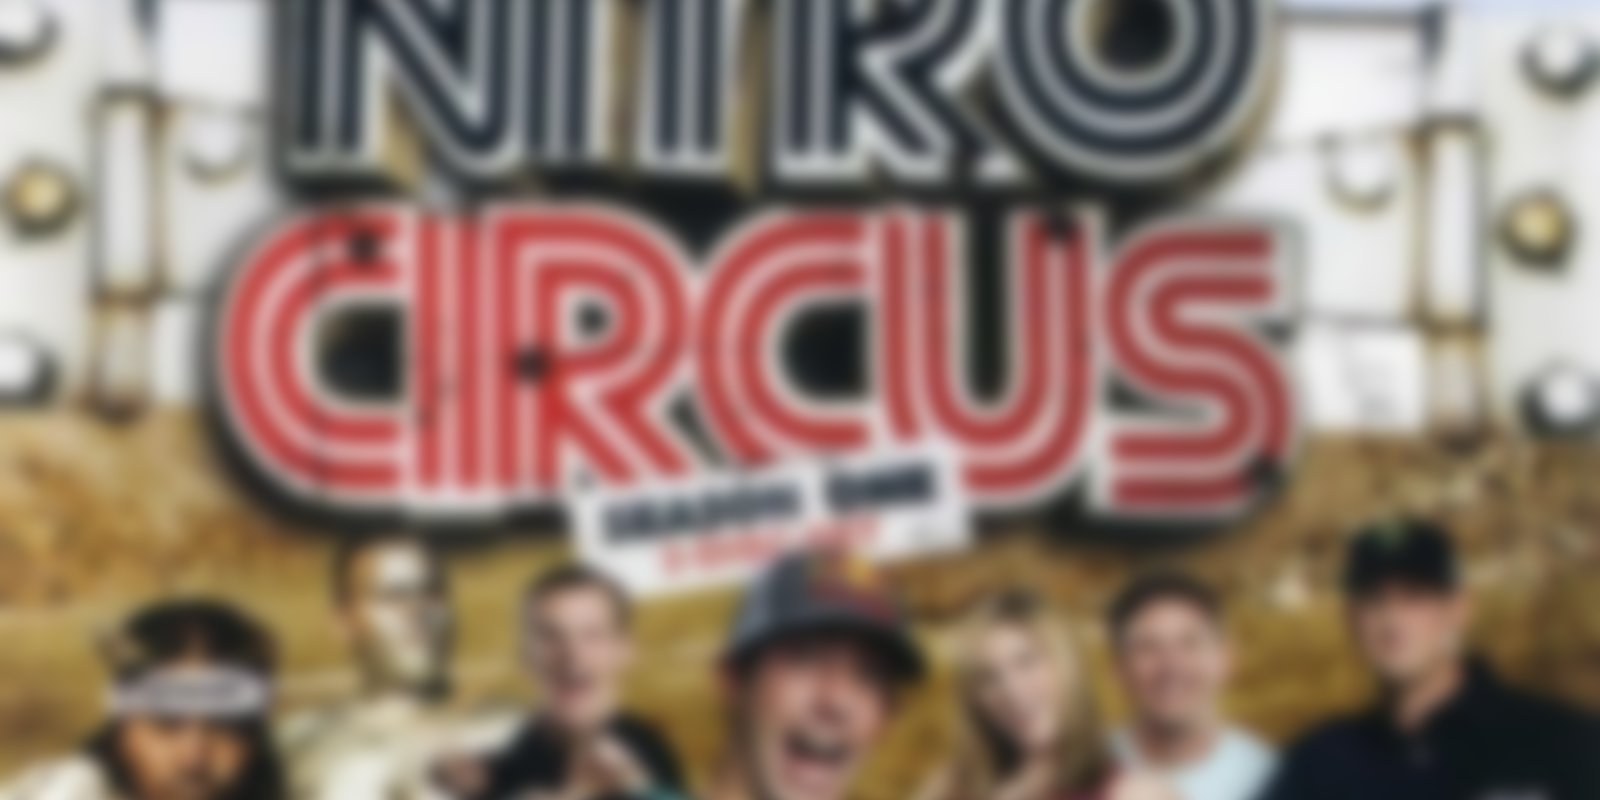 Nitro Circus - Staffel 1